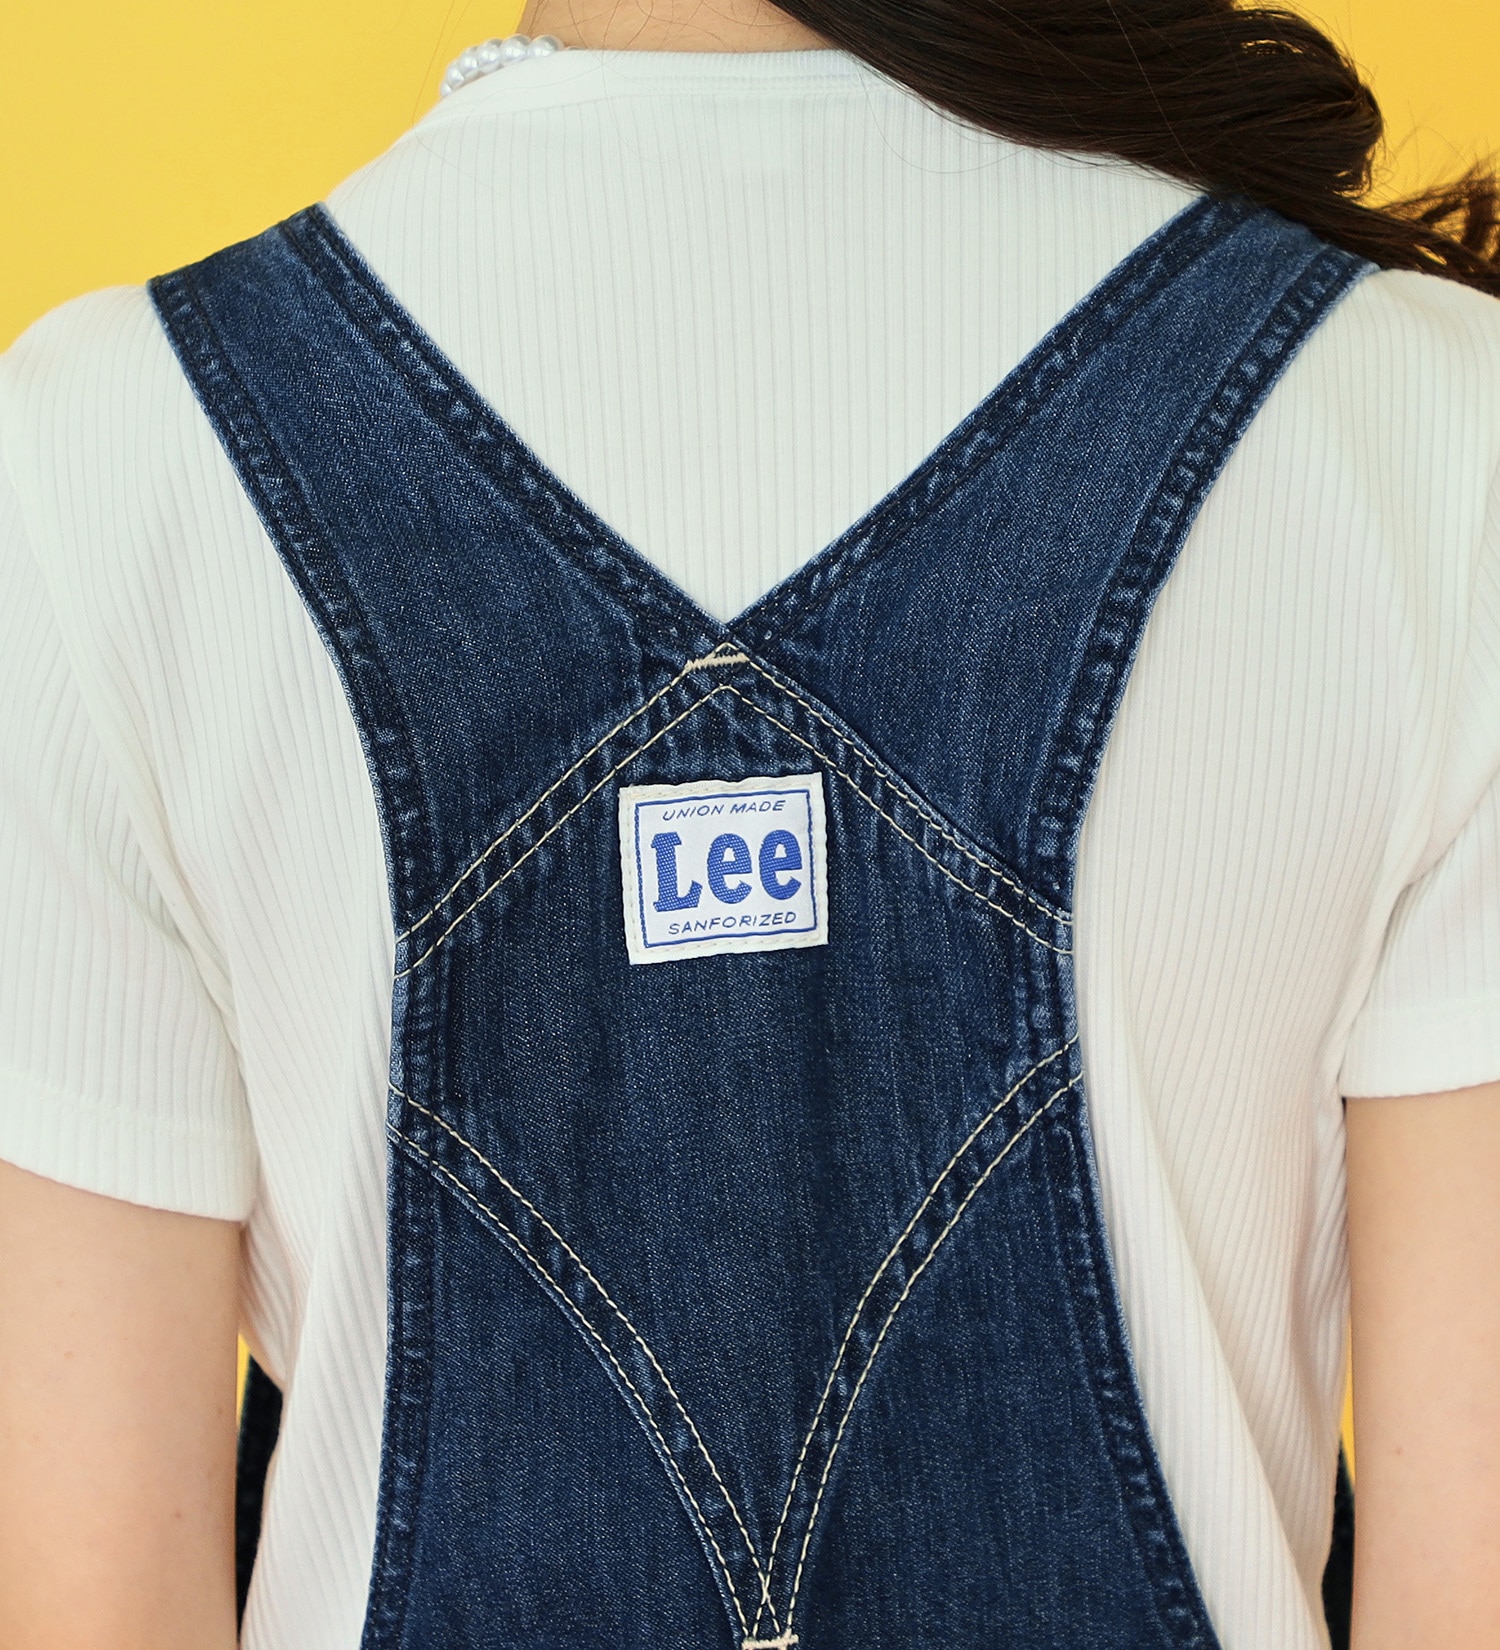 Lee(リー)の【130-160cm】キッズ ジャンパースカート|オールインワン/サロペット/オーバーオール/キッズ|濃色ブルー